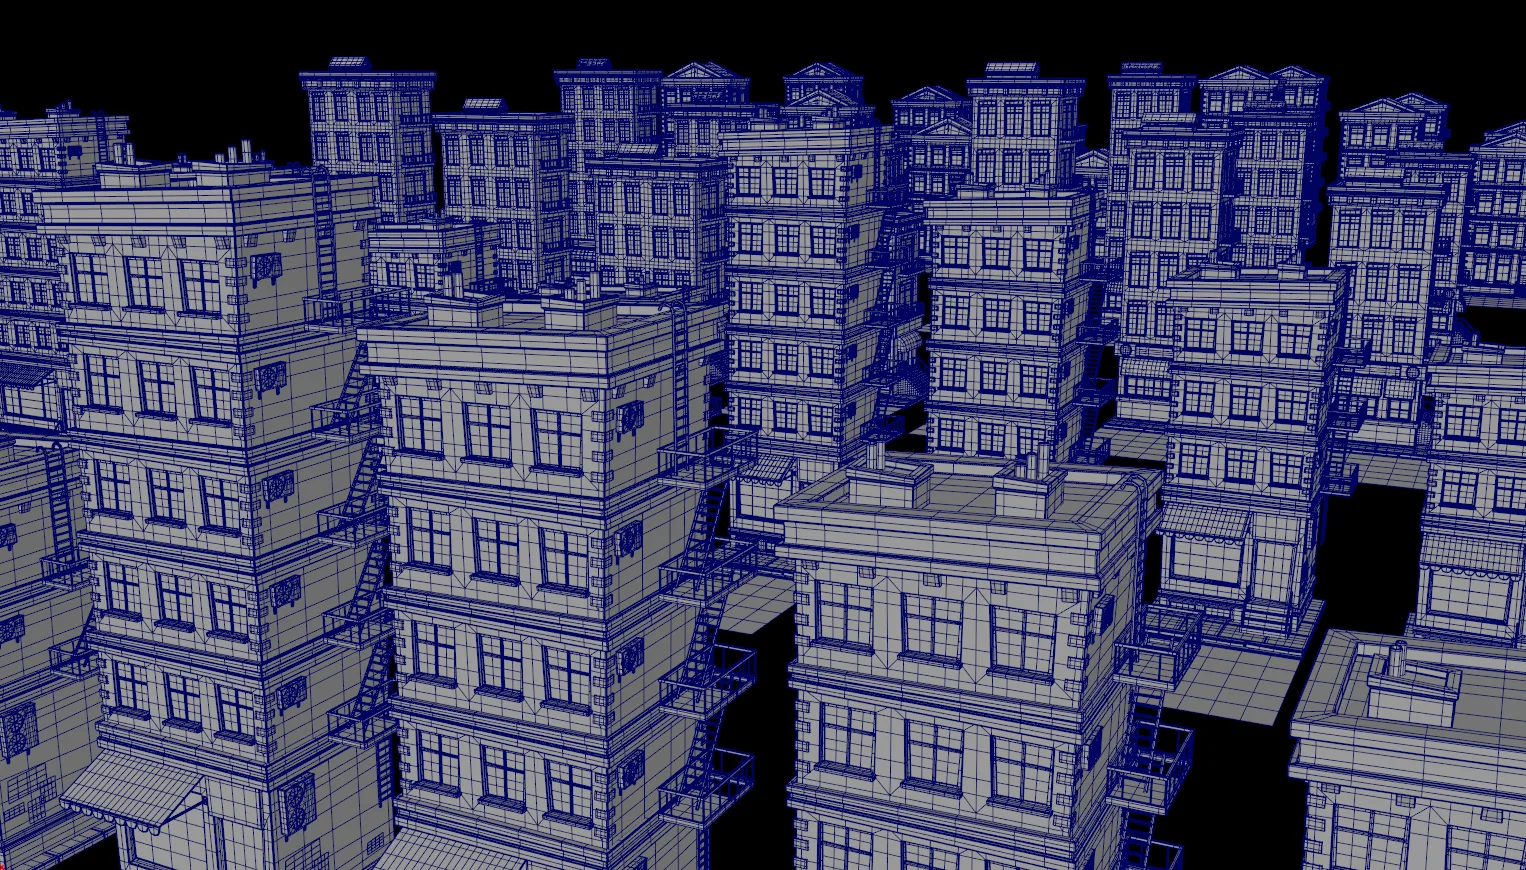 KITBASH buildings - 3D models